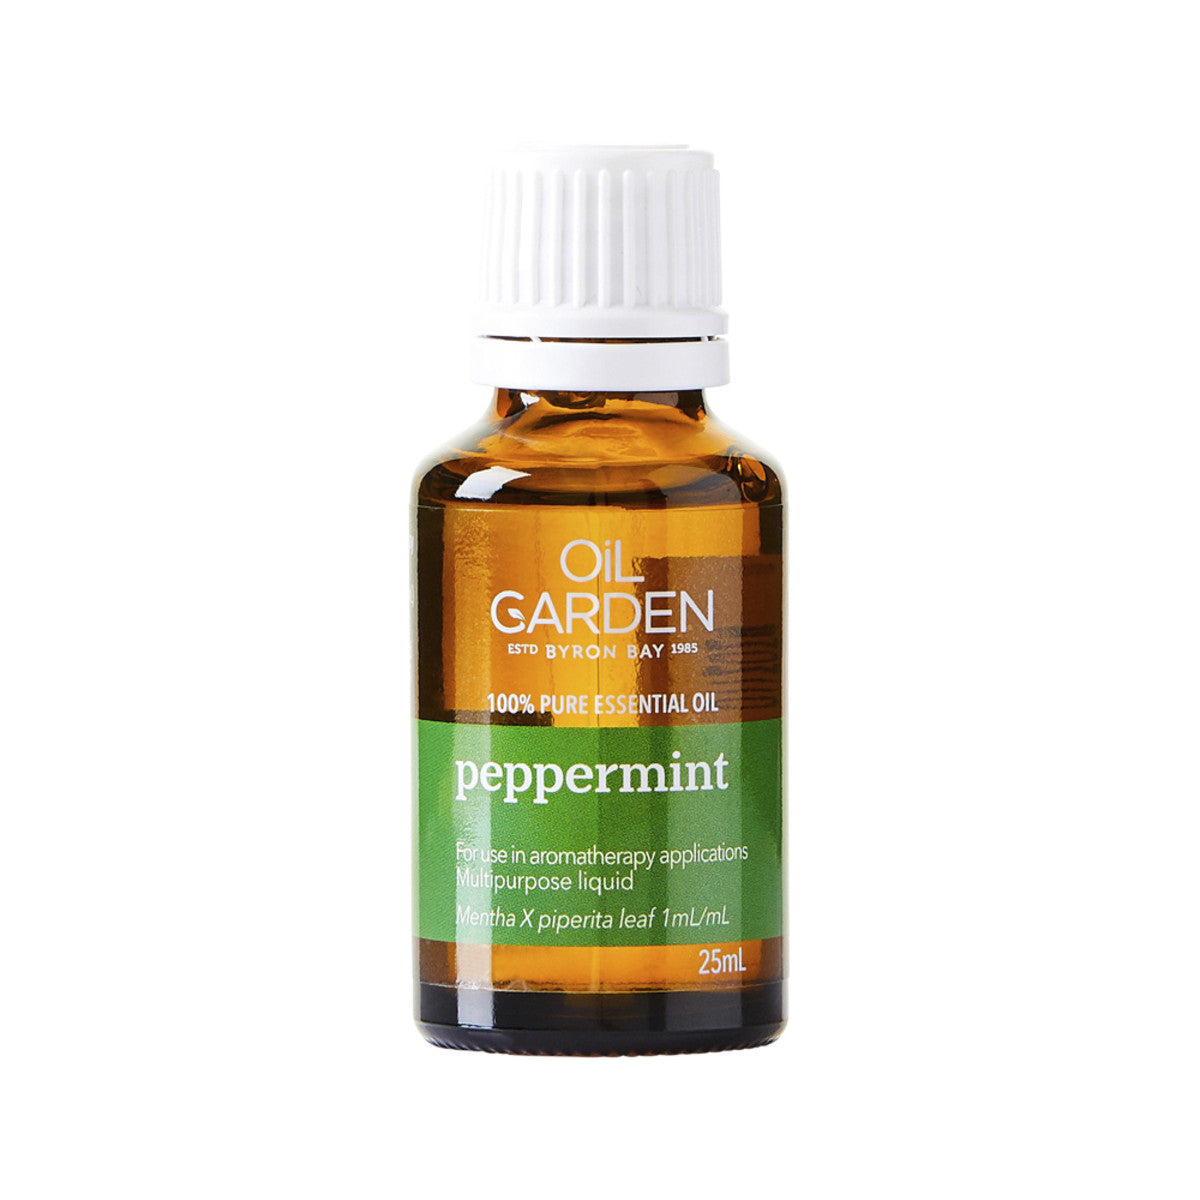 Oil Garden Essential Oil Peppermint 25ml